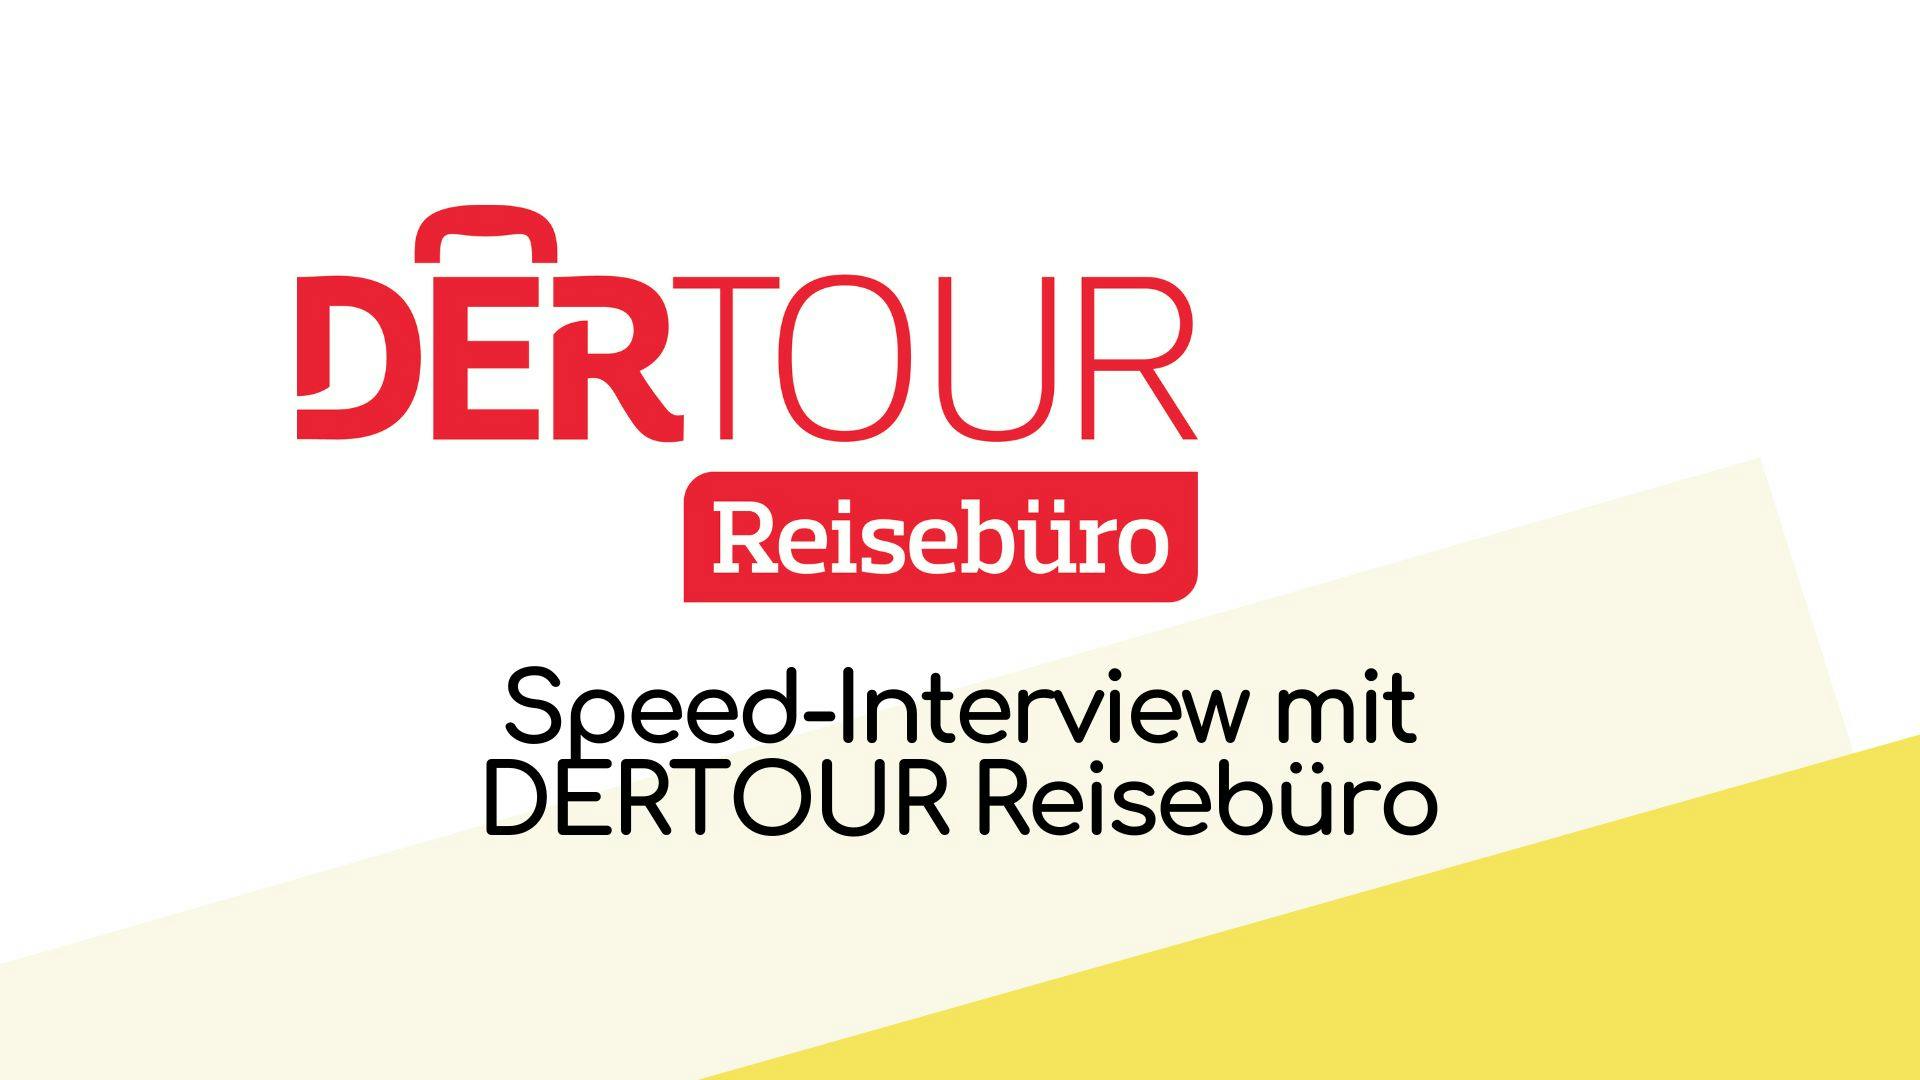 Cover Image for Speed-Interview mit DERTOUR Reisebüro